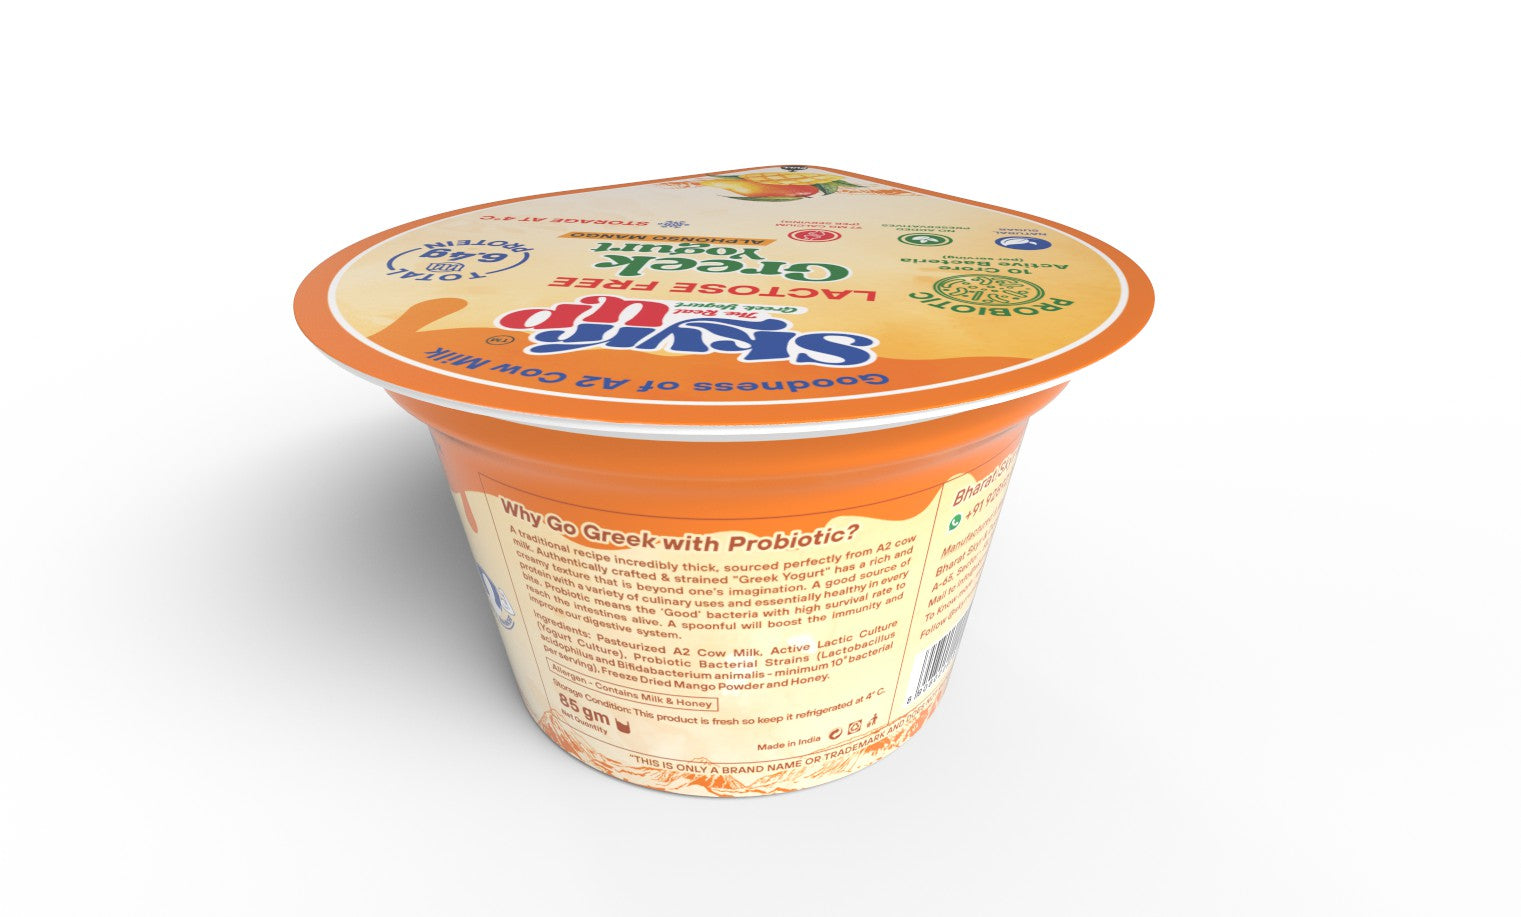 Greek Yogurt - 85gm - Mango (Made From A2 Cow Milk) - Probiotic, 6.4gm Protein, Zero Preservatives, Lactose Free